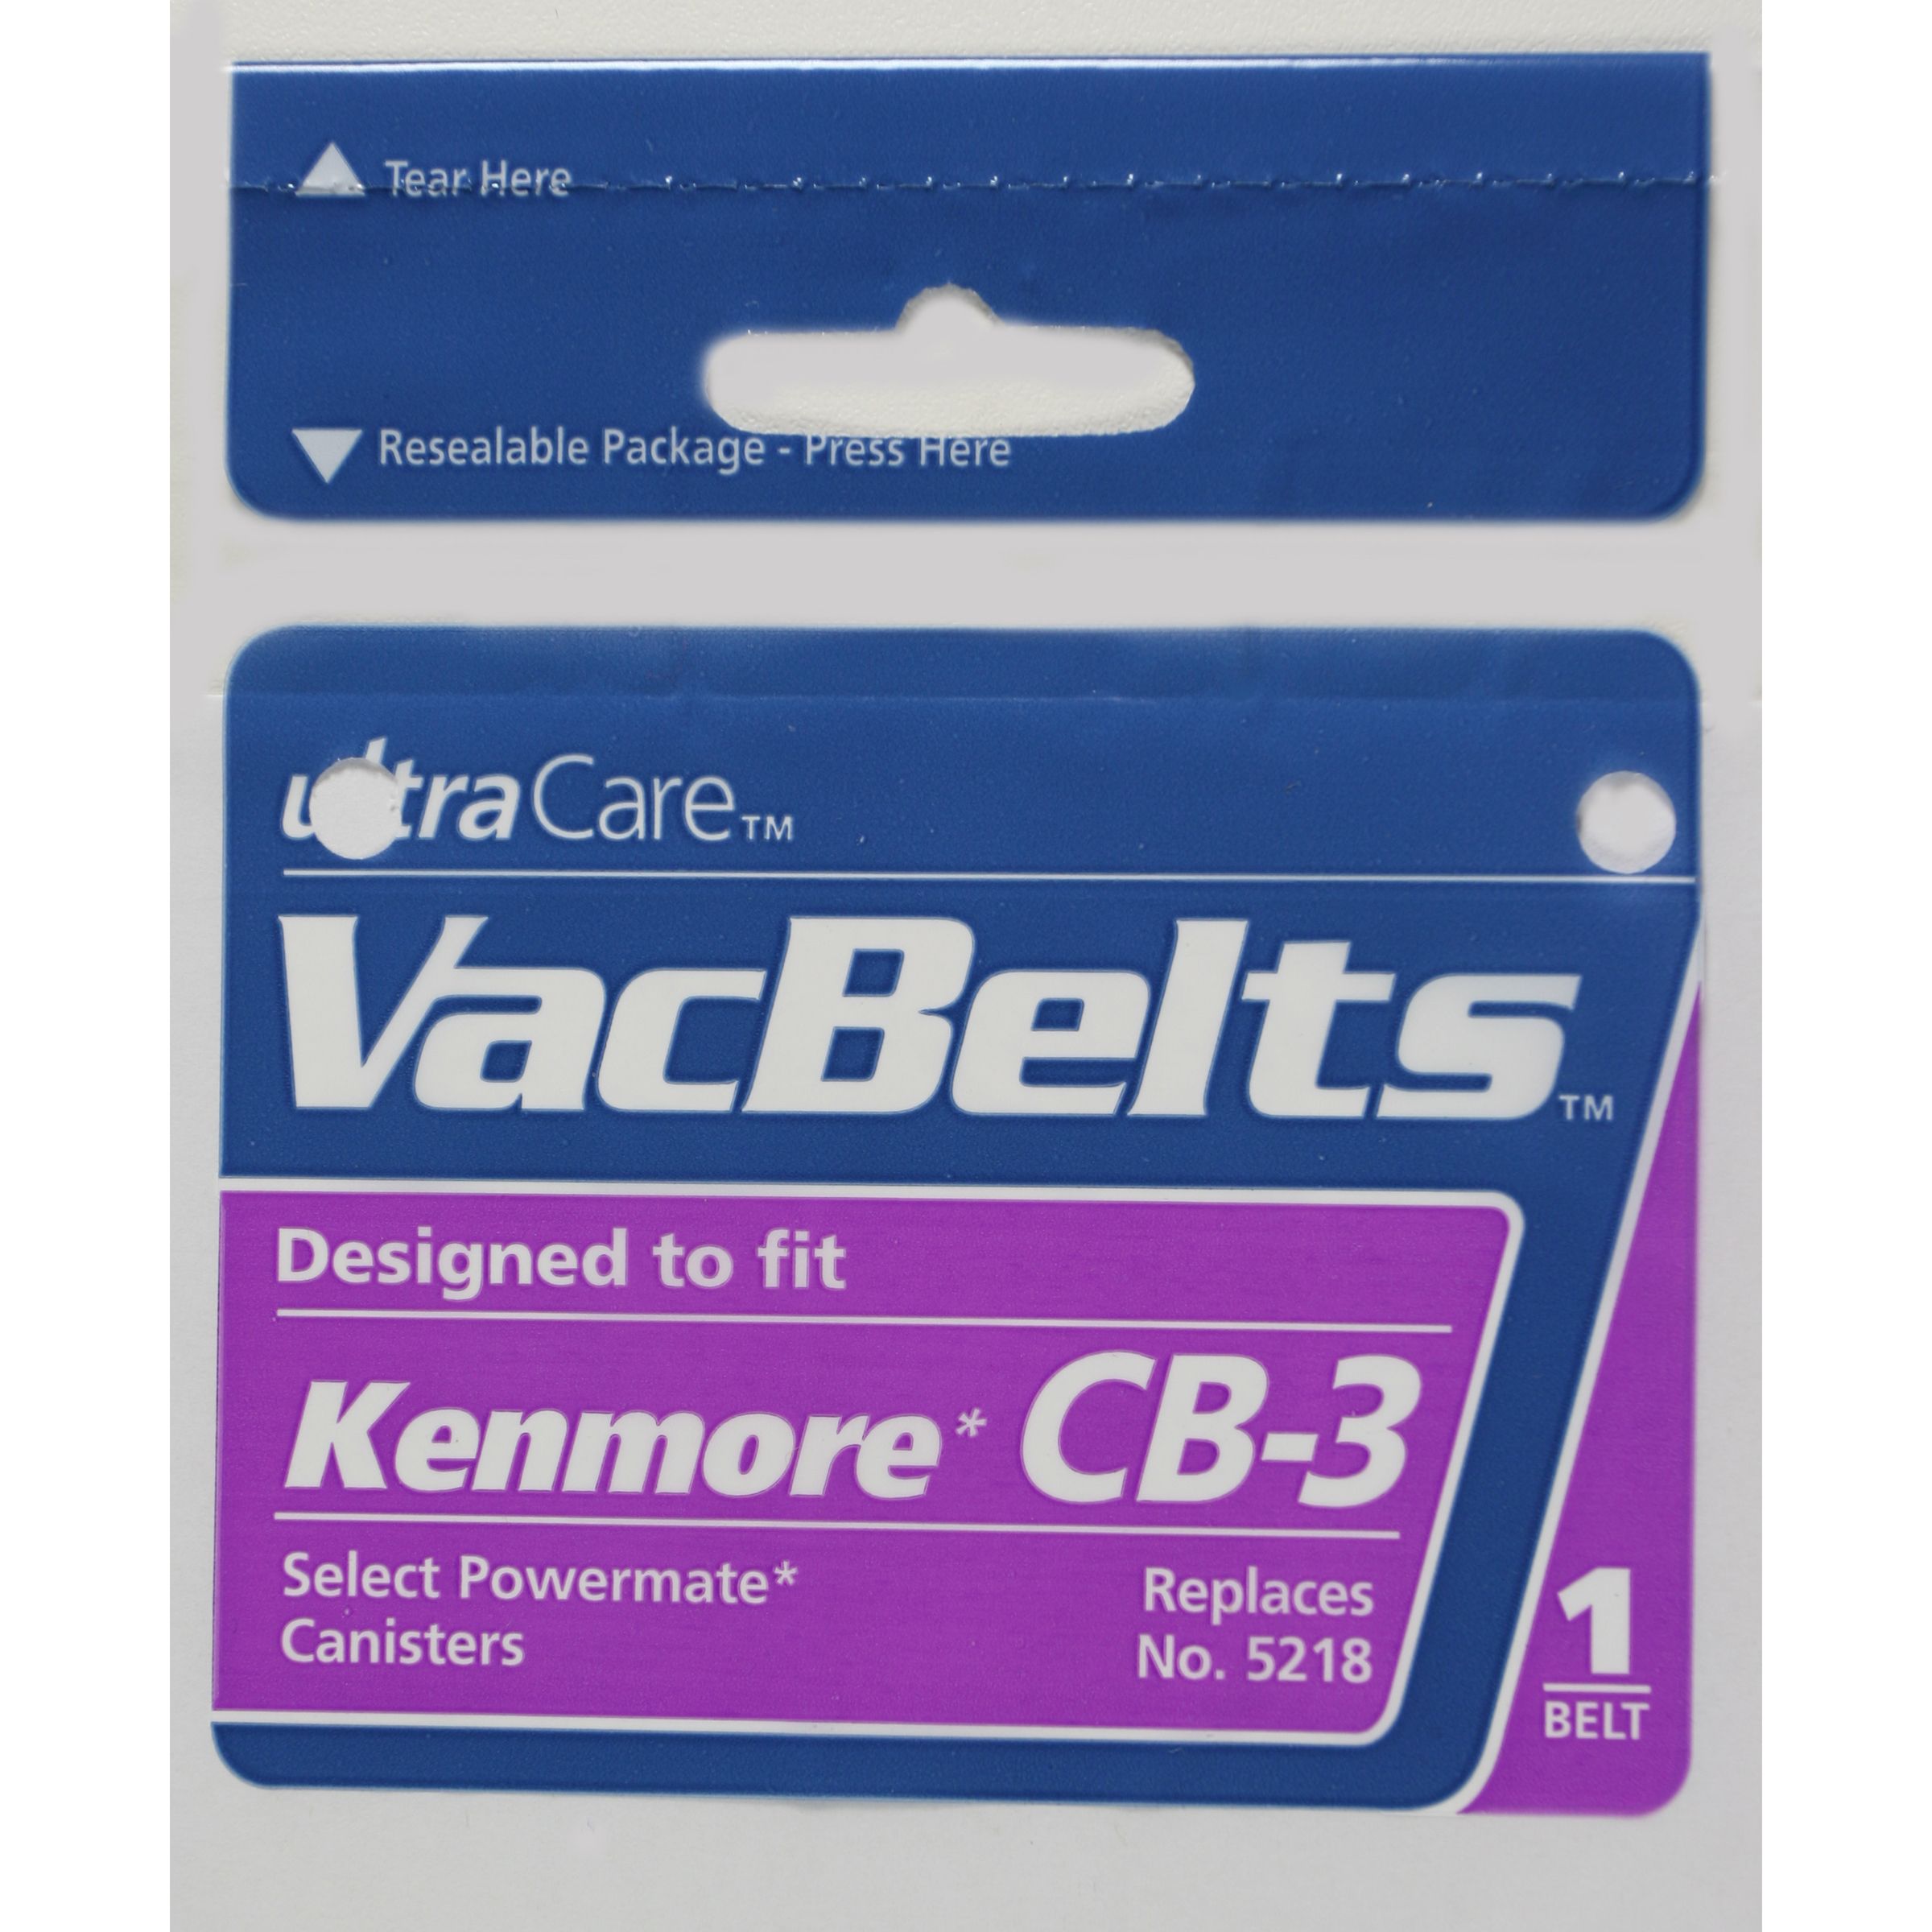 UltraCare 613096 Kenmore CB-3 Vacuum Belt